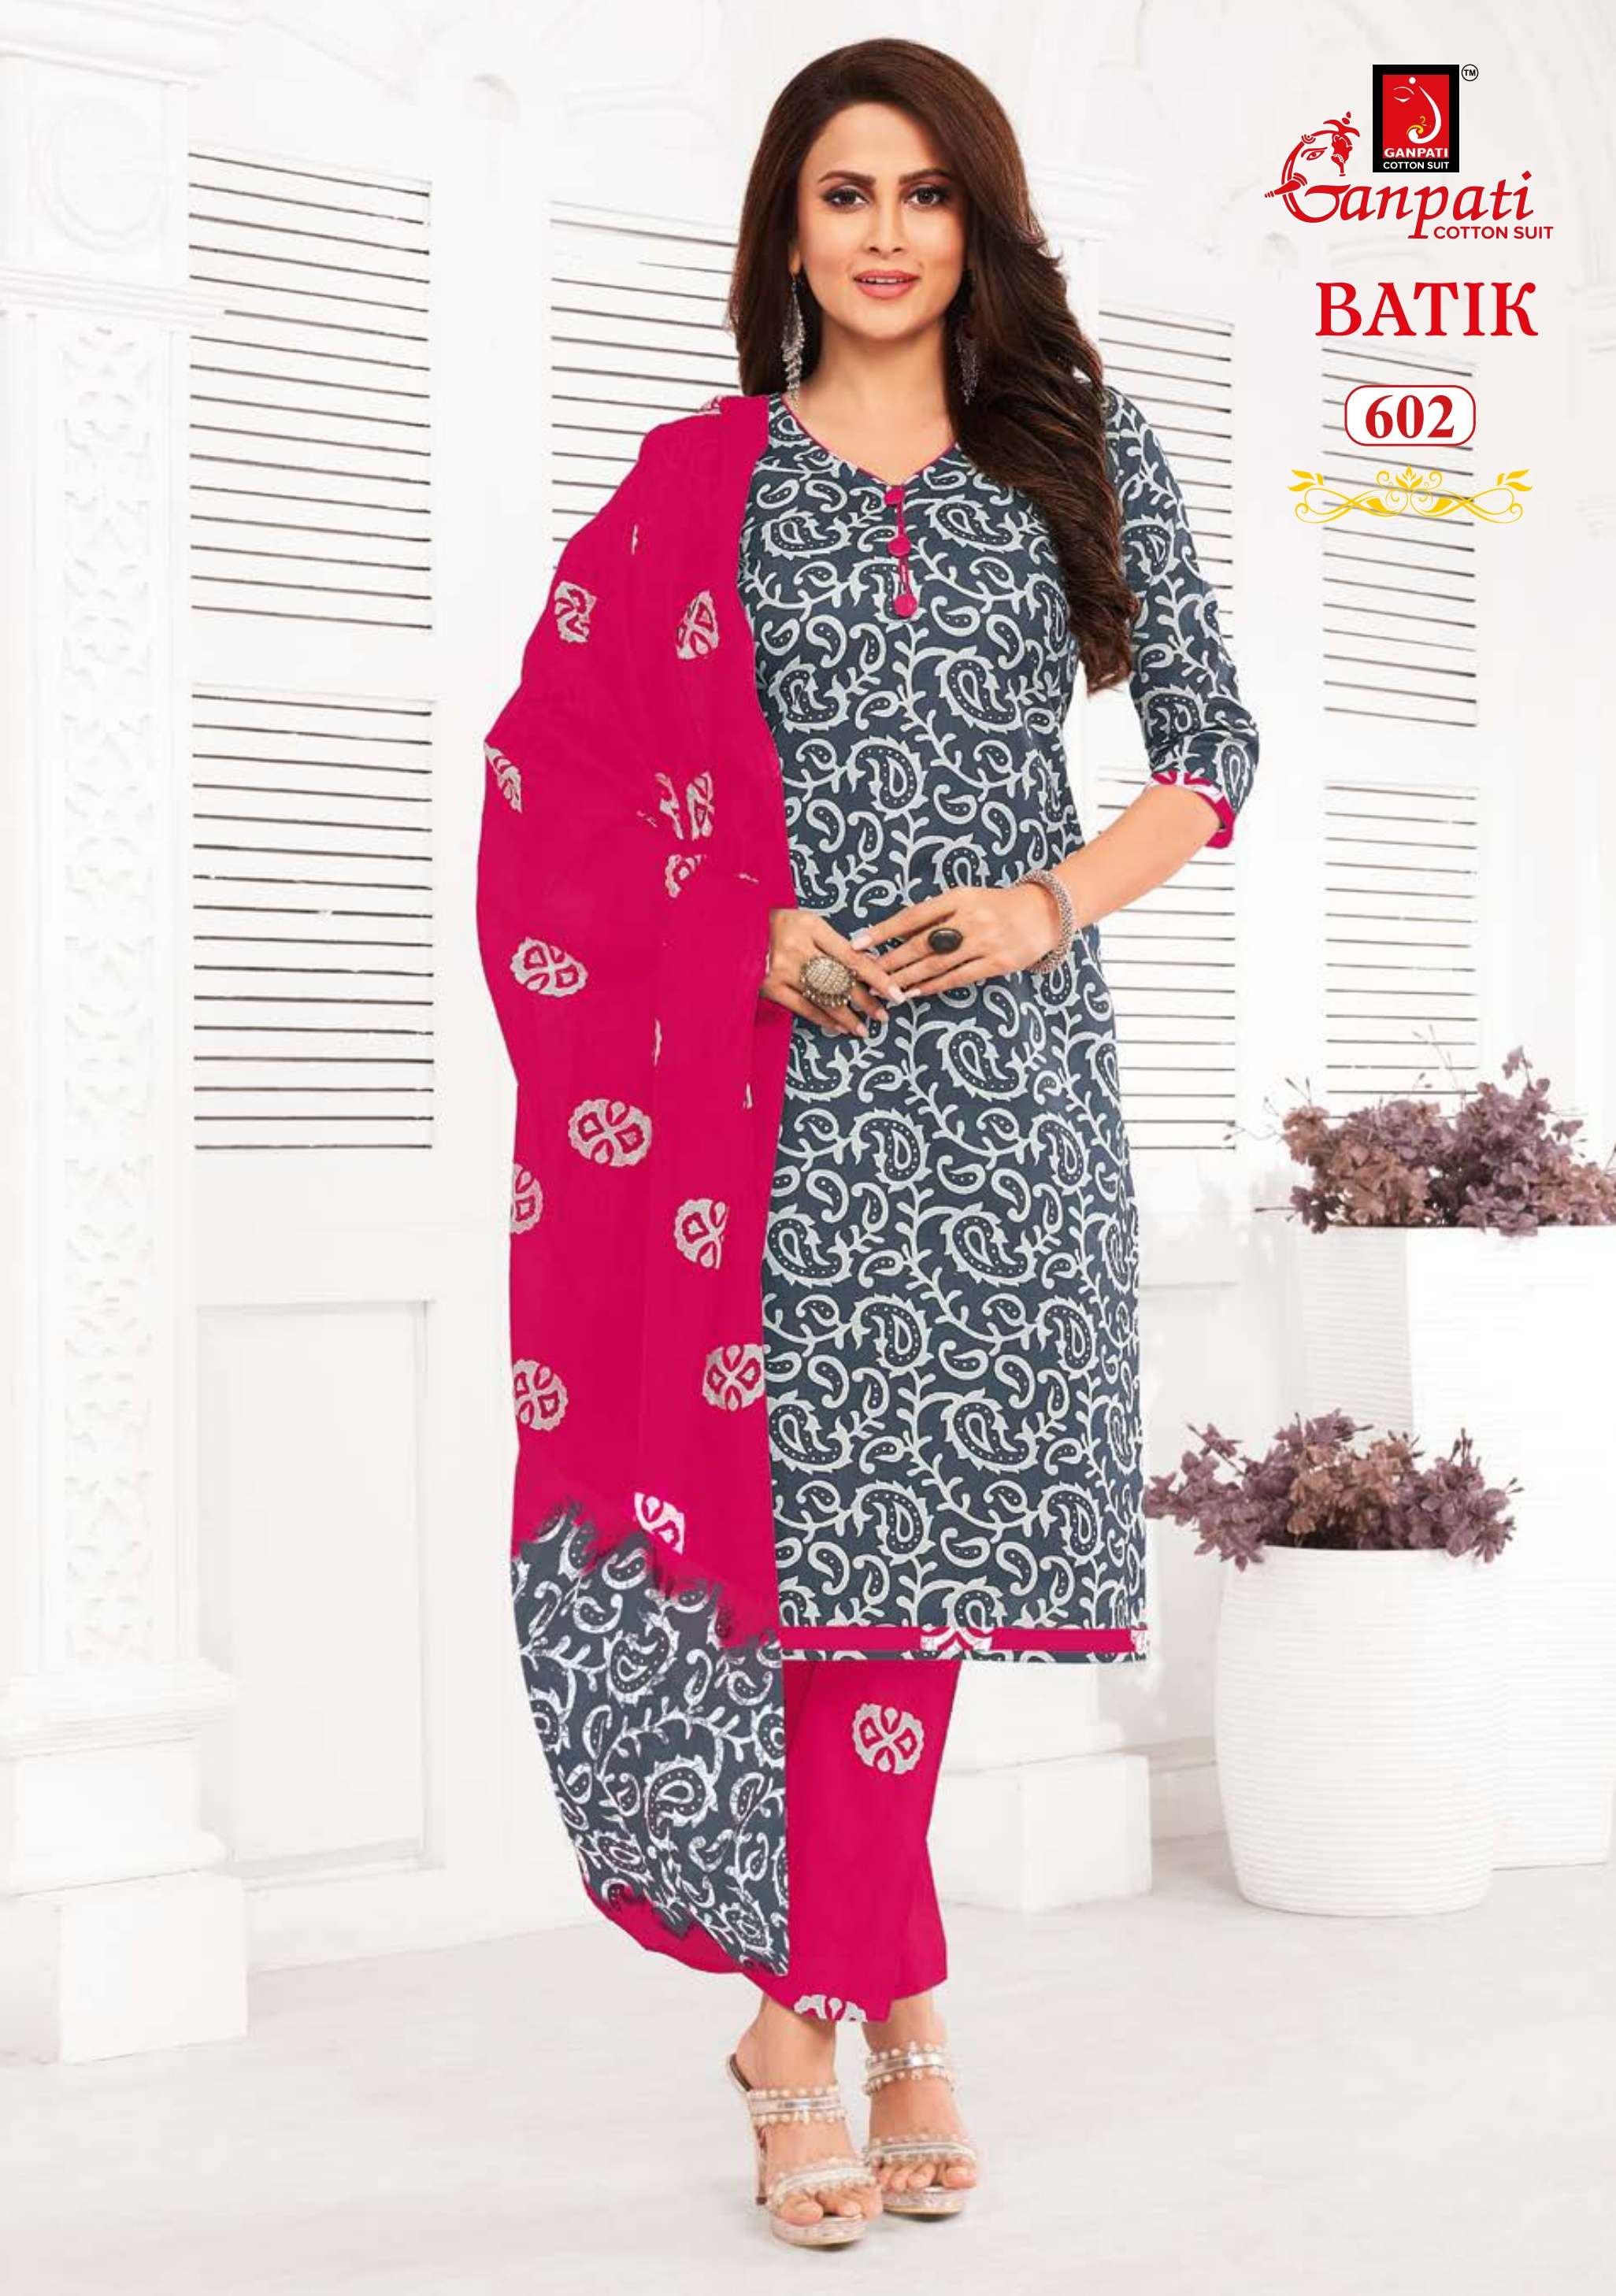 ganpati cotton suits batik vol-6 601-615 series designer cotton salwar kameez wholesaler surat gujarat